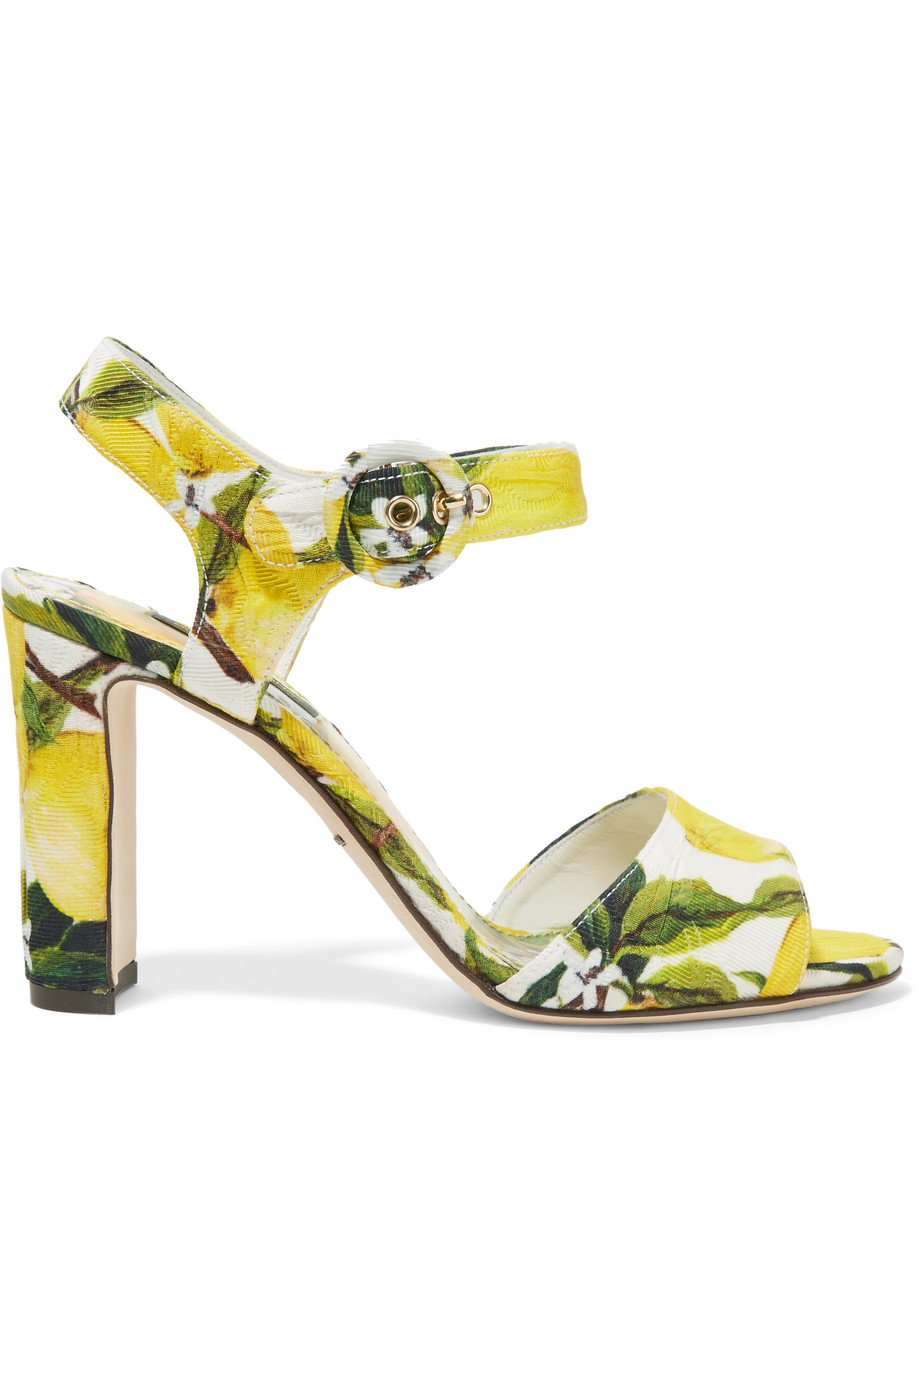 Dolce & Gabbana Printed Faille Sandals | ModeSens